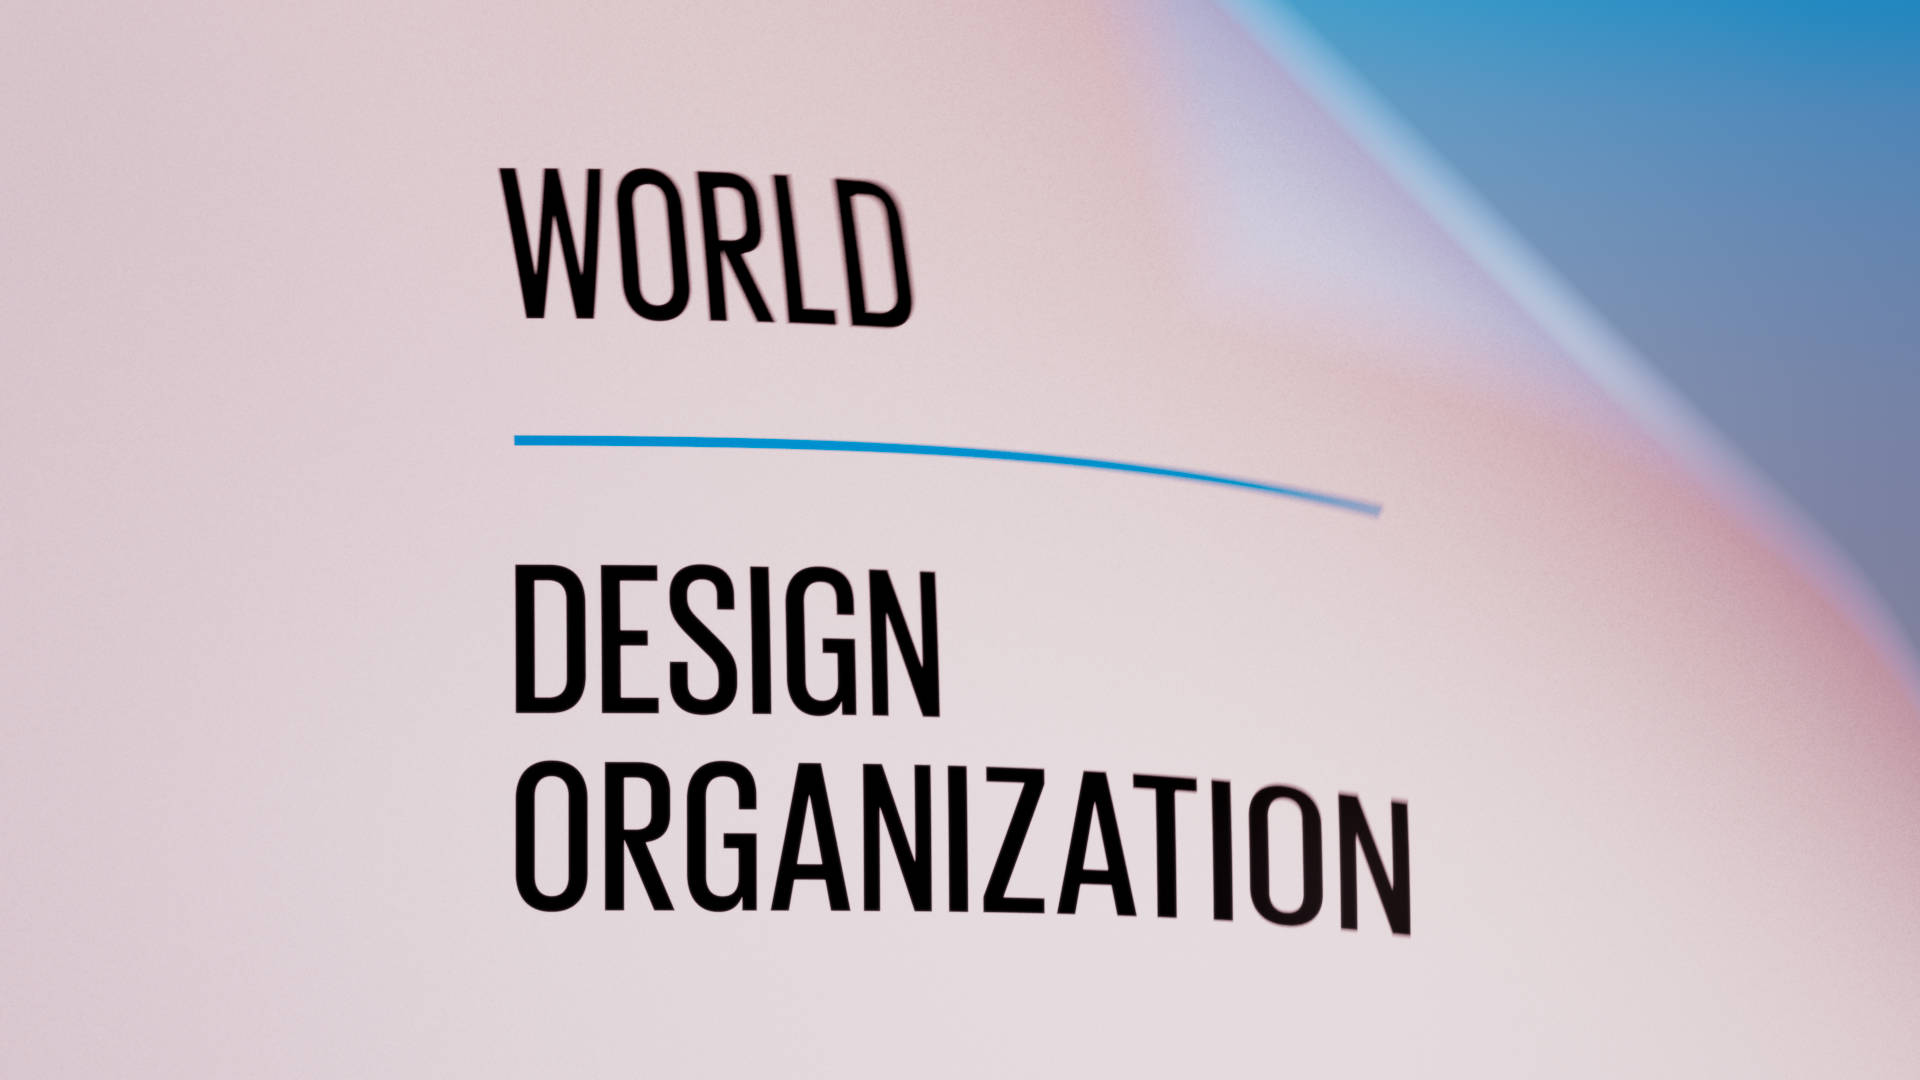 World Design Organiztion logo on a piece of paper.